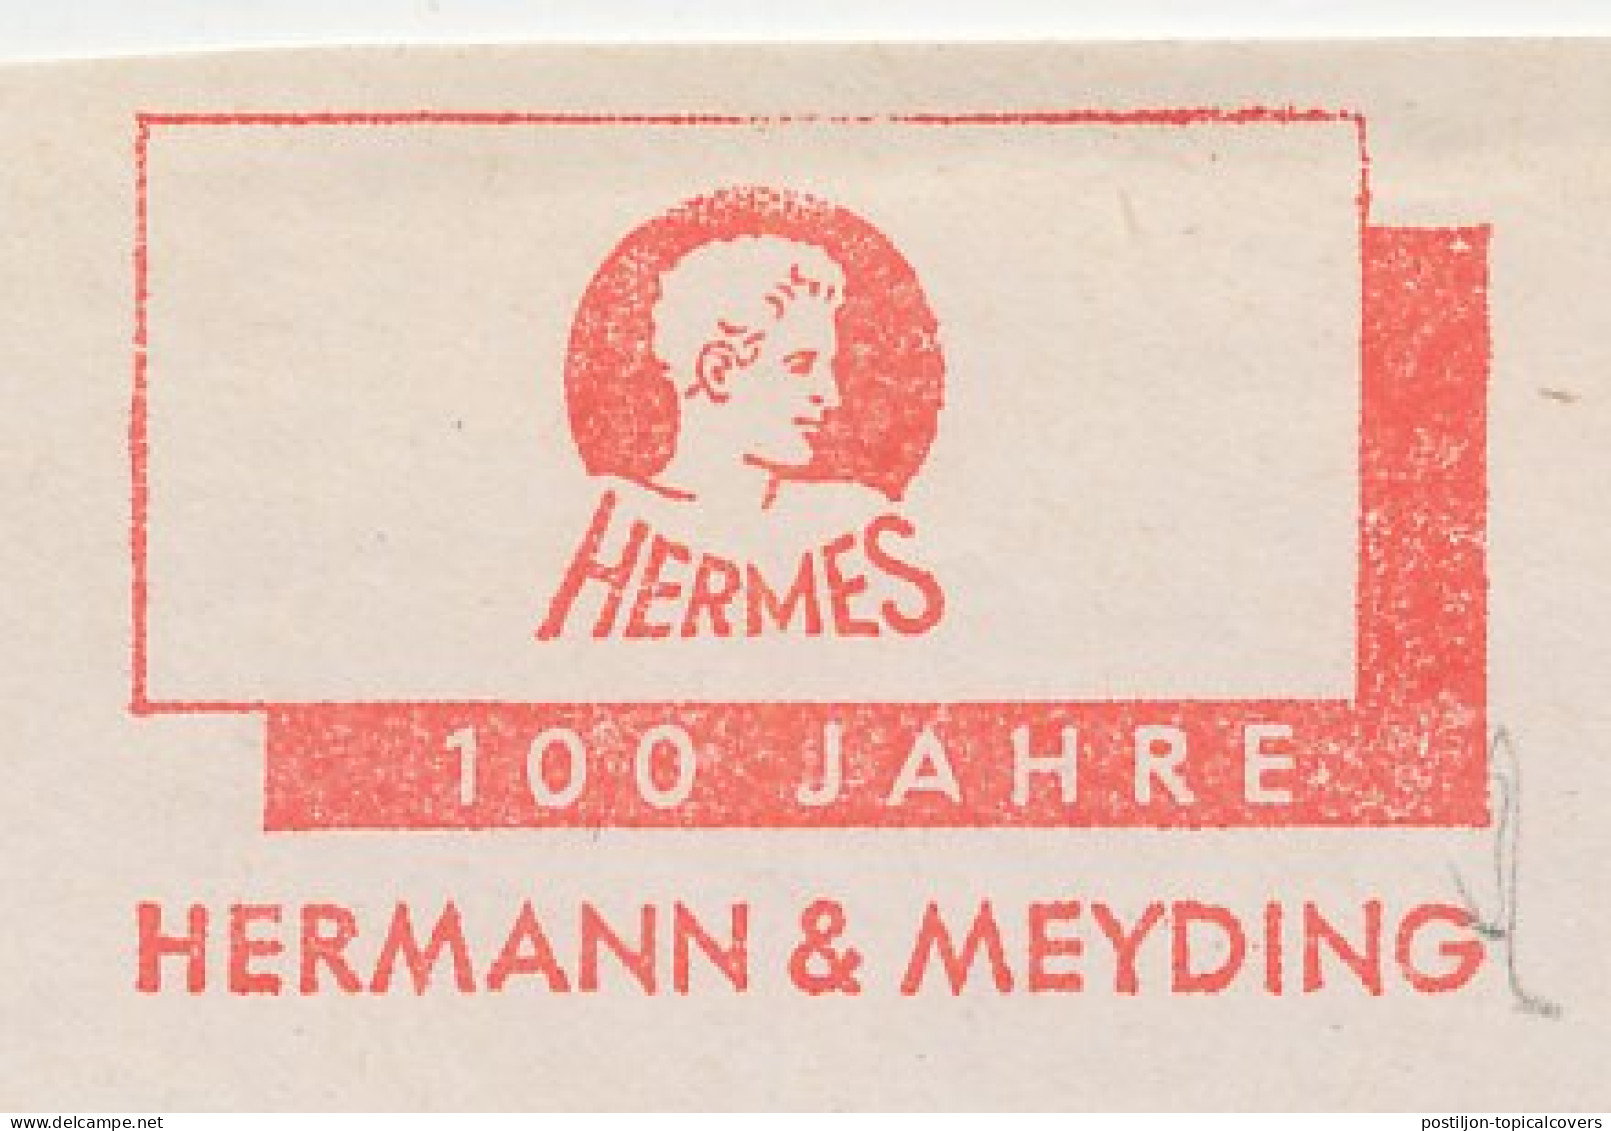 Meter Cut Germany 1968 Hermes - Mythology